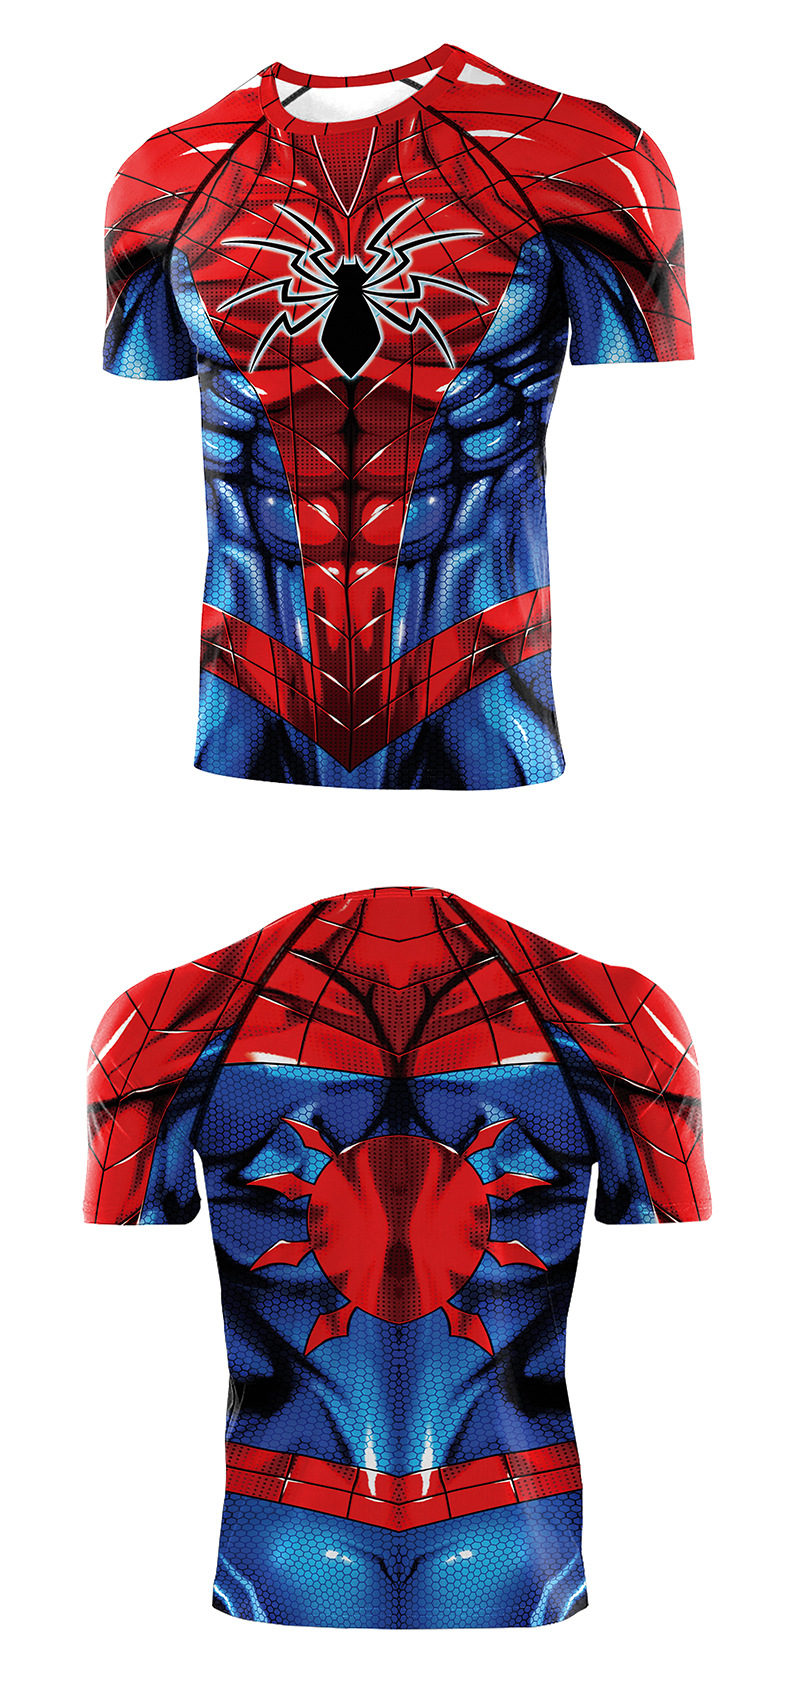 Marvel Avenger Spider Man Birthday Gift Shirt - product detail - front and back